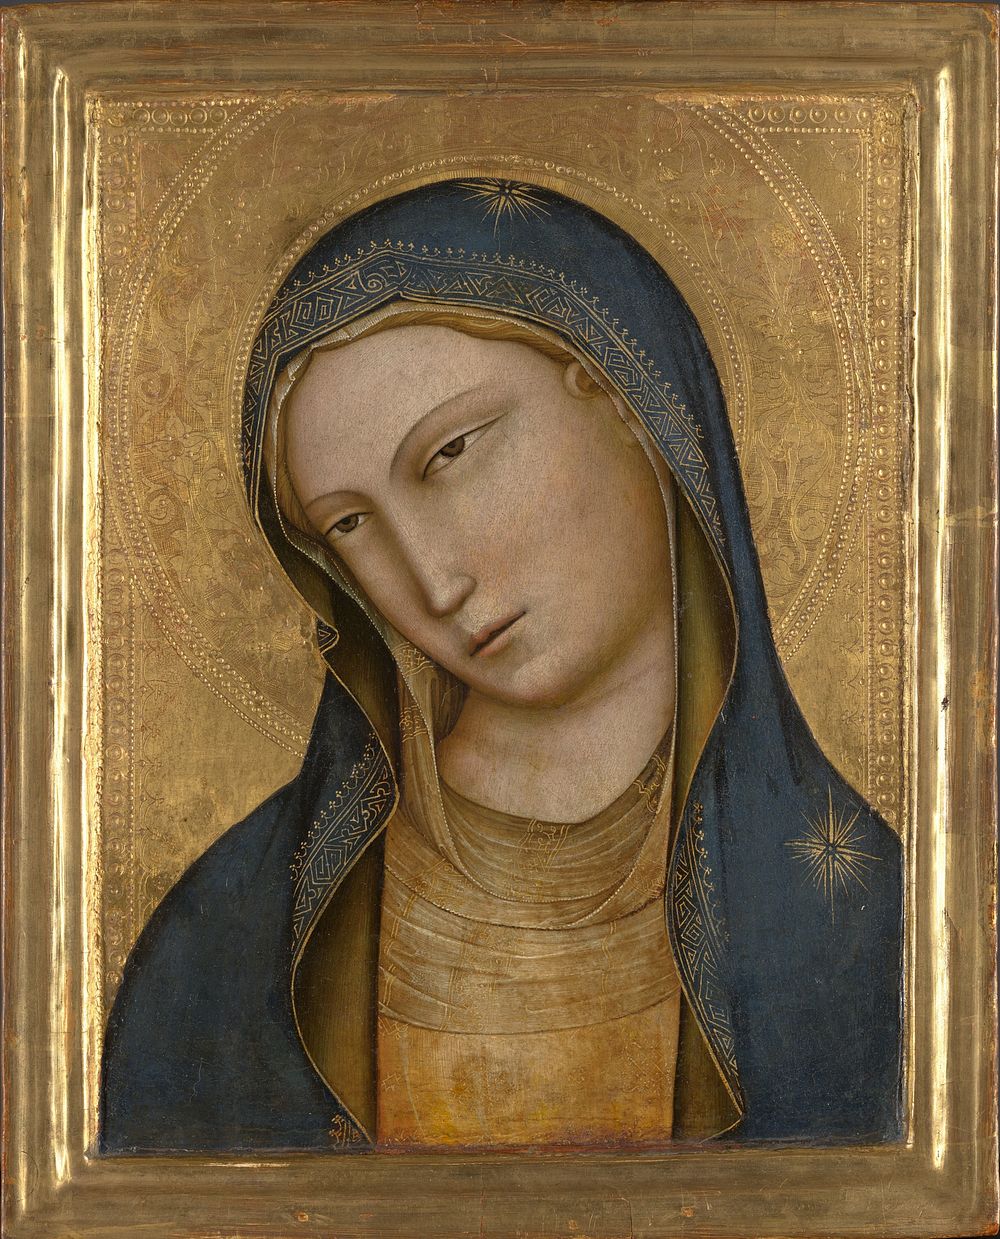 Bust of Saint Mary (formerly entitled Madonna) (c. 1381 - c. 1425) by Lorenzo Monaco